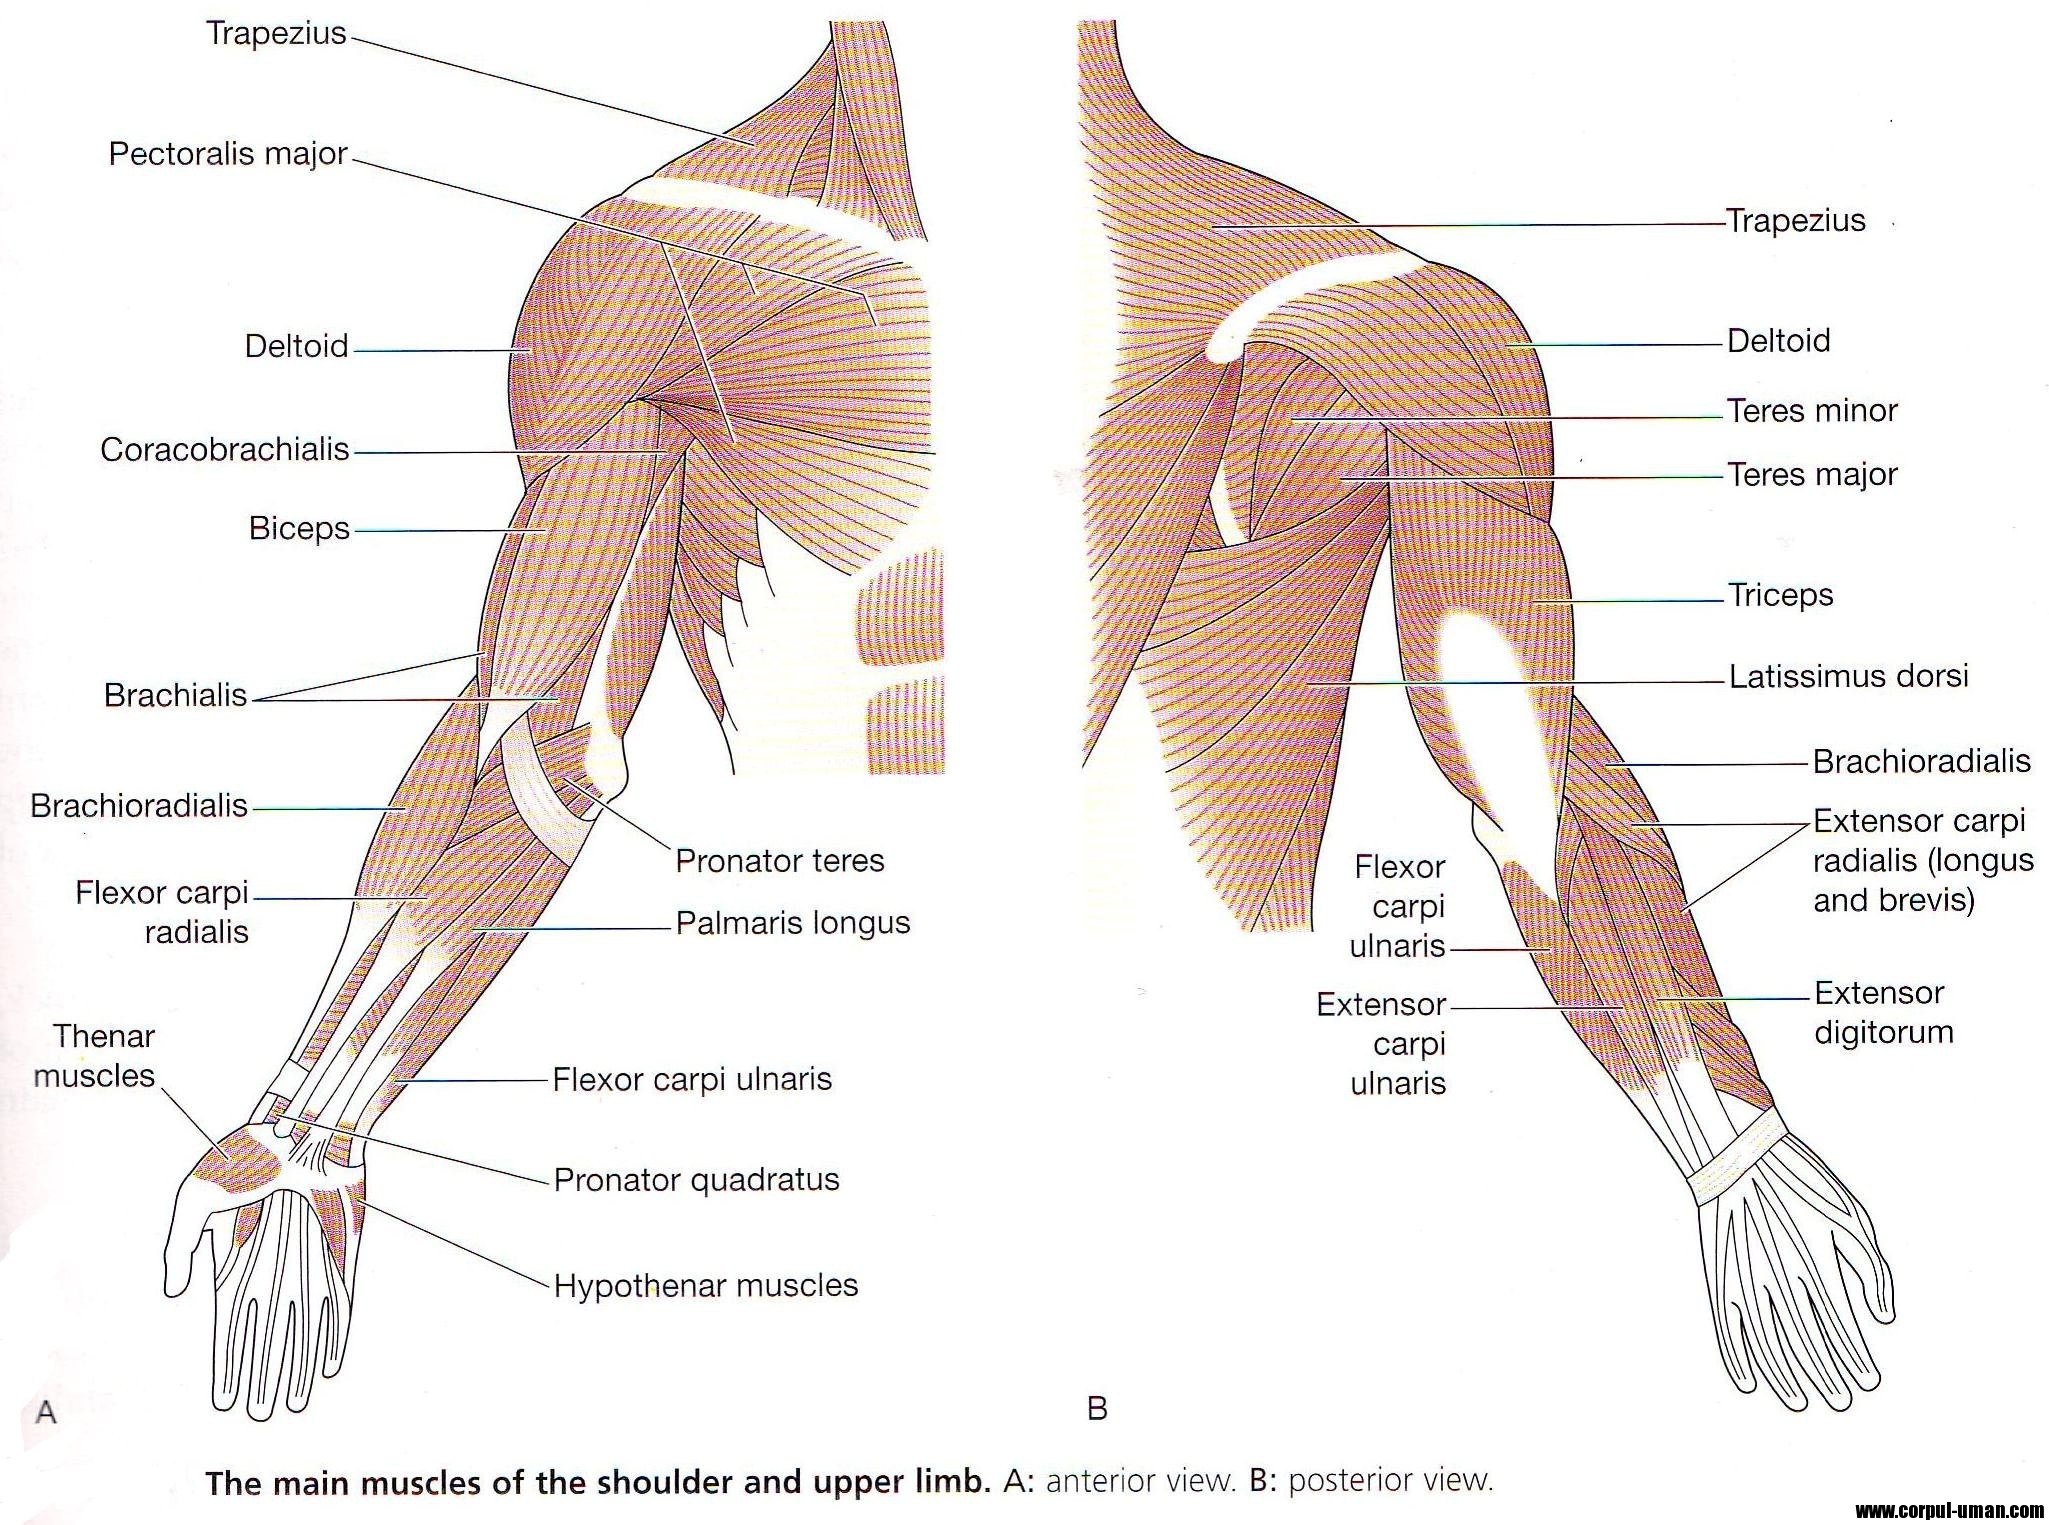 Анатомия мышц рук человека. Плечо и предплечье у человека анатомия мышцы. Строение мышц руки и плеча человека. Строение мышц предплечья руки человека анатомия. Мышцы руки и плеча схема.